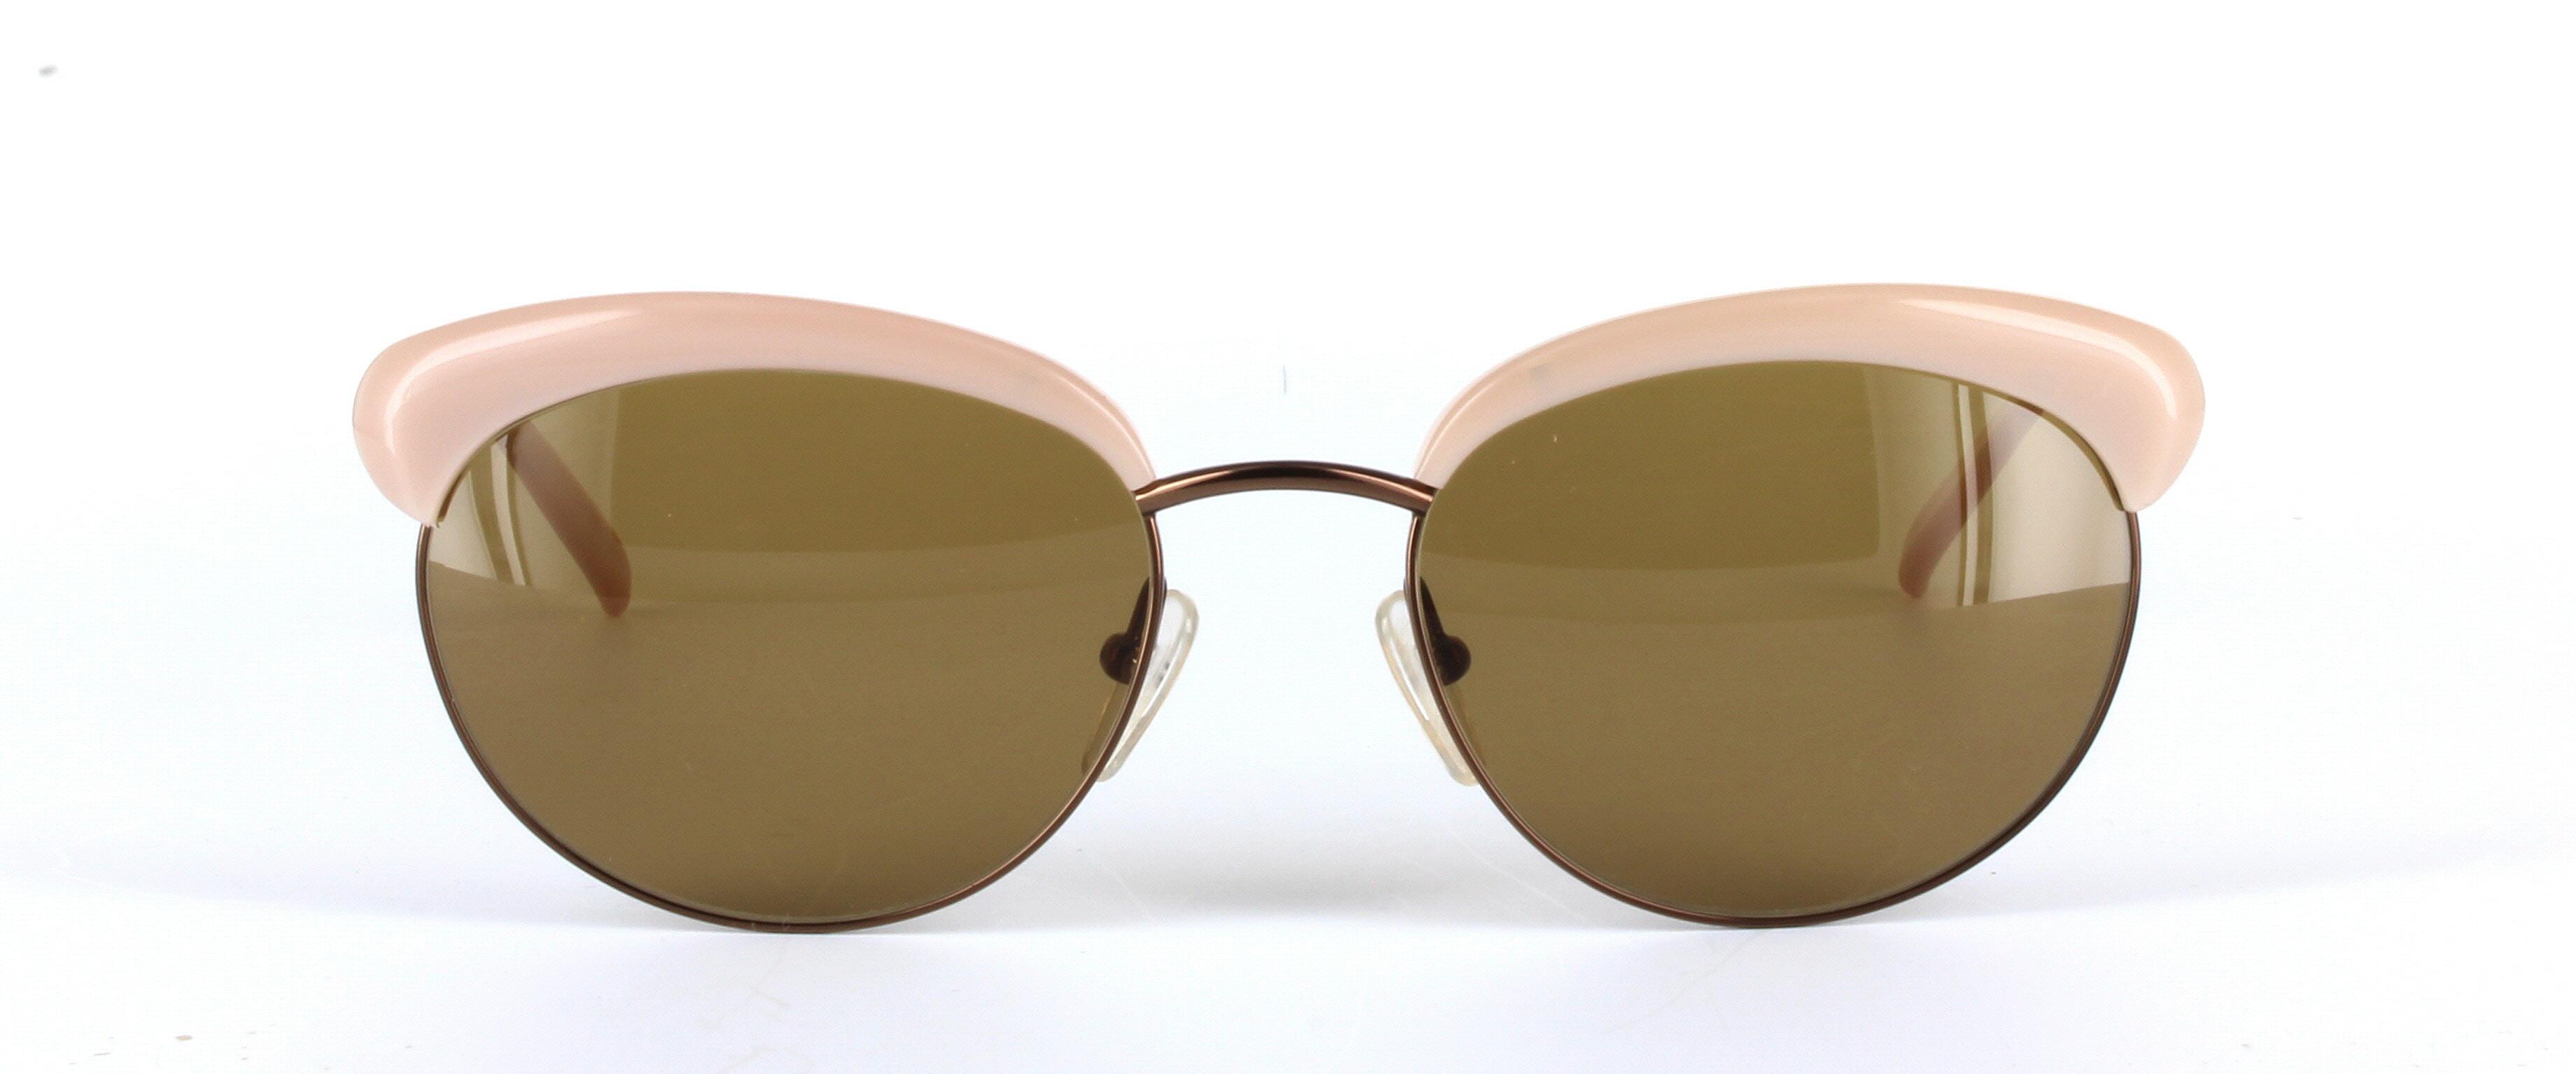 Coconuts Brown and Pink Full Rim Metal Sunglasses - Image View 5